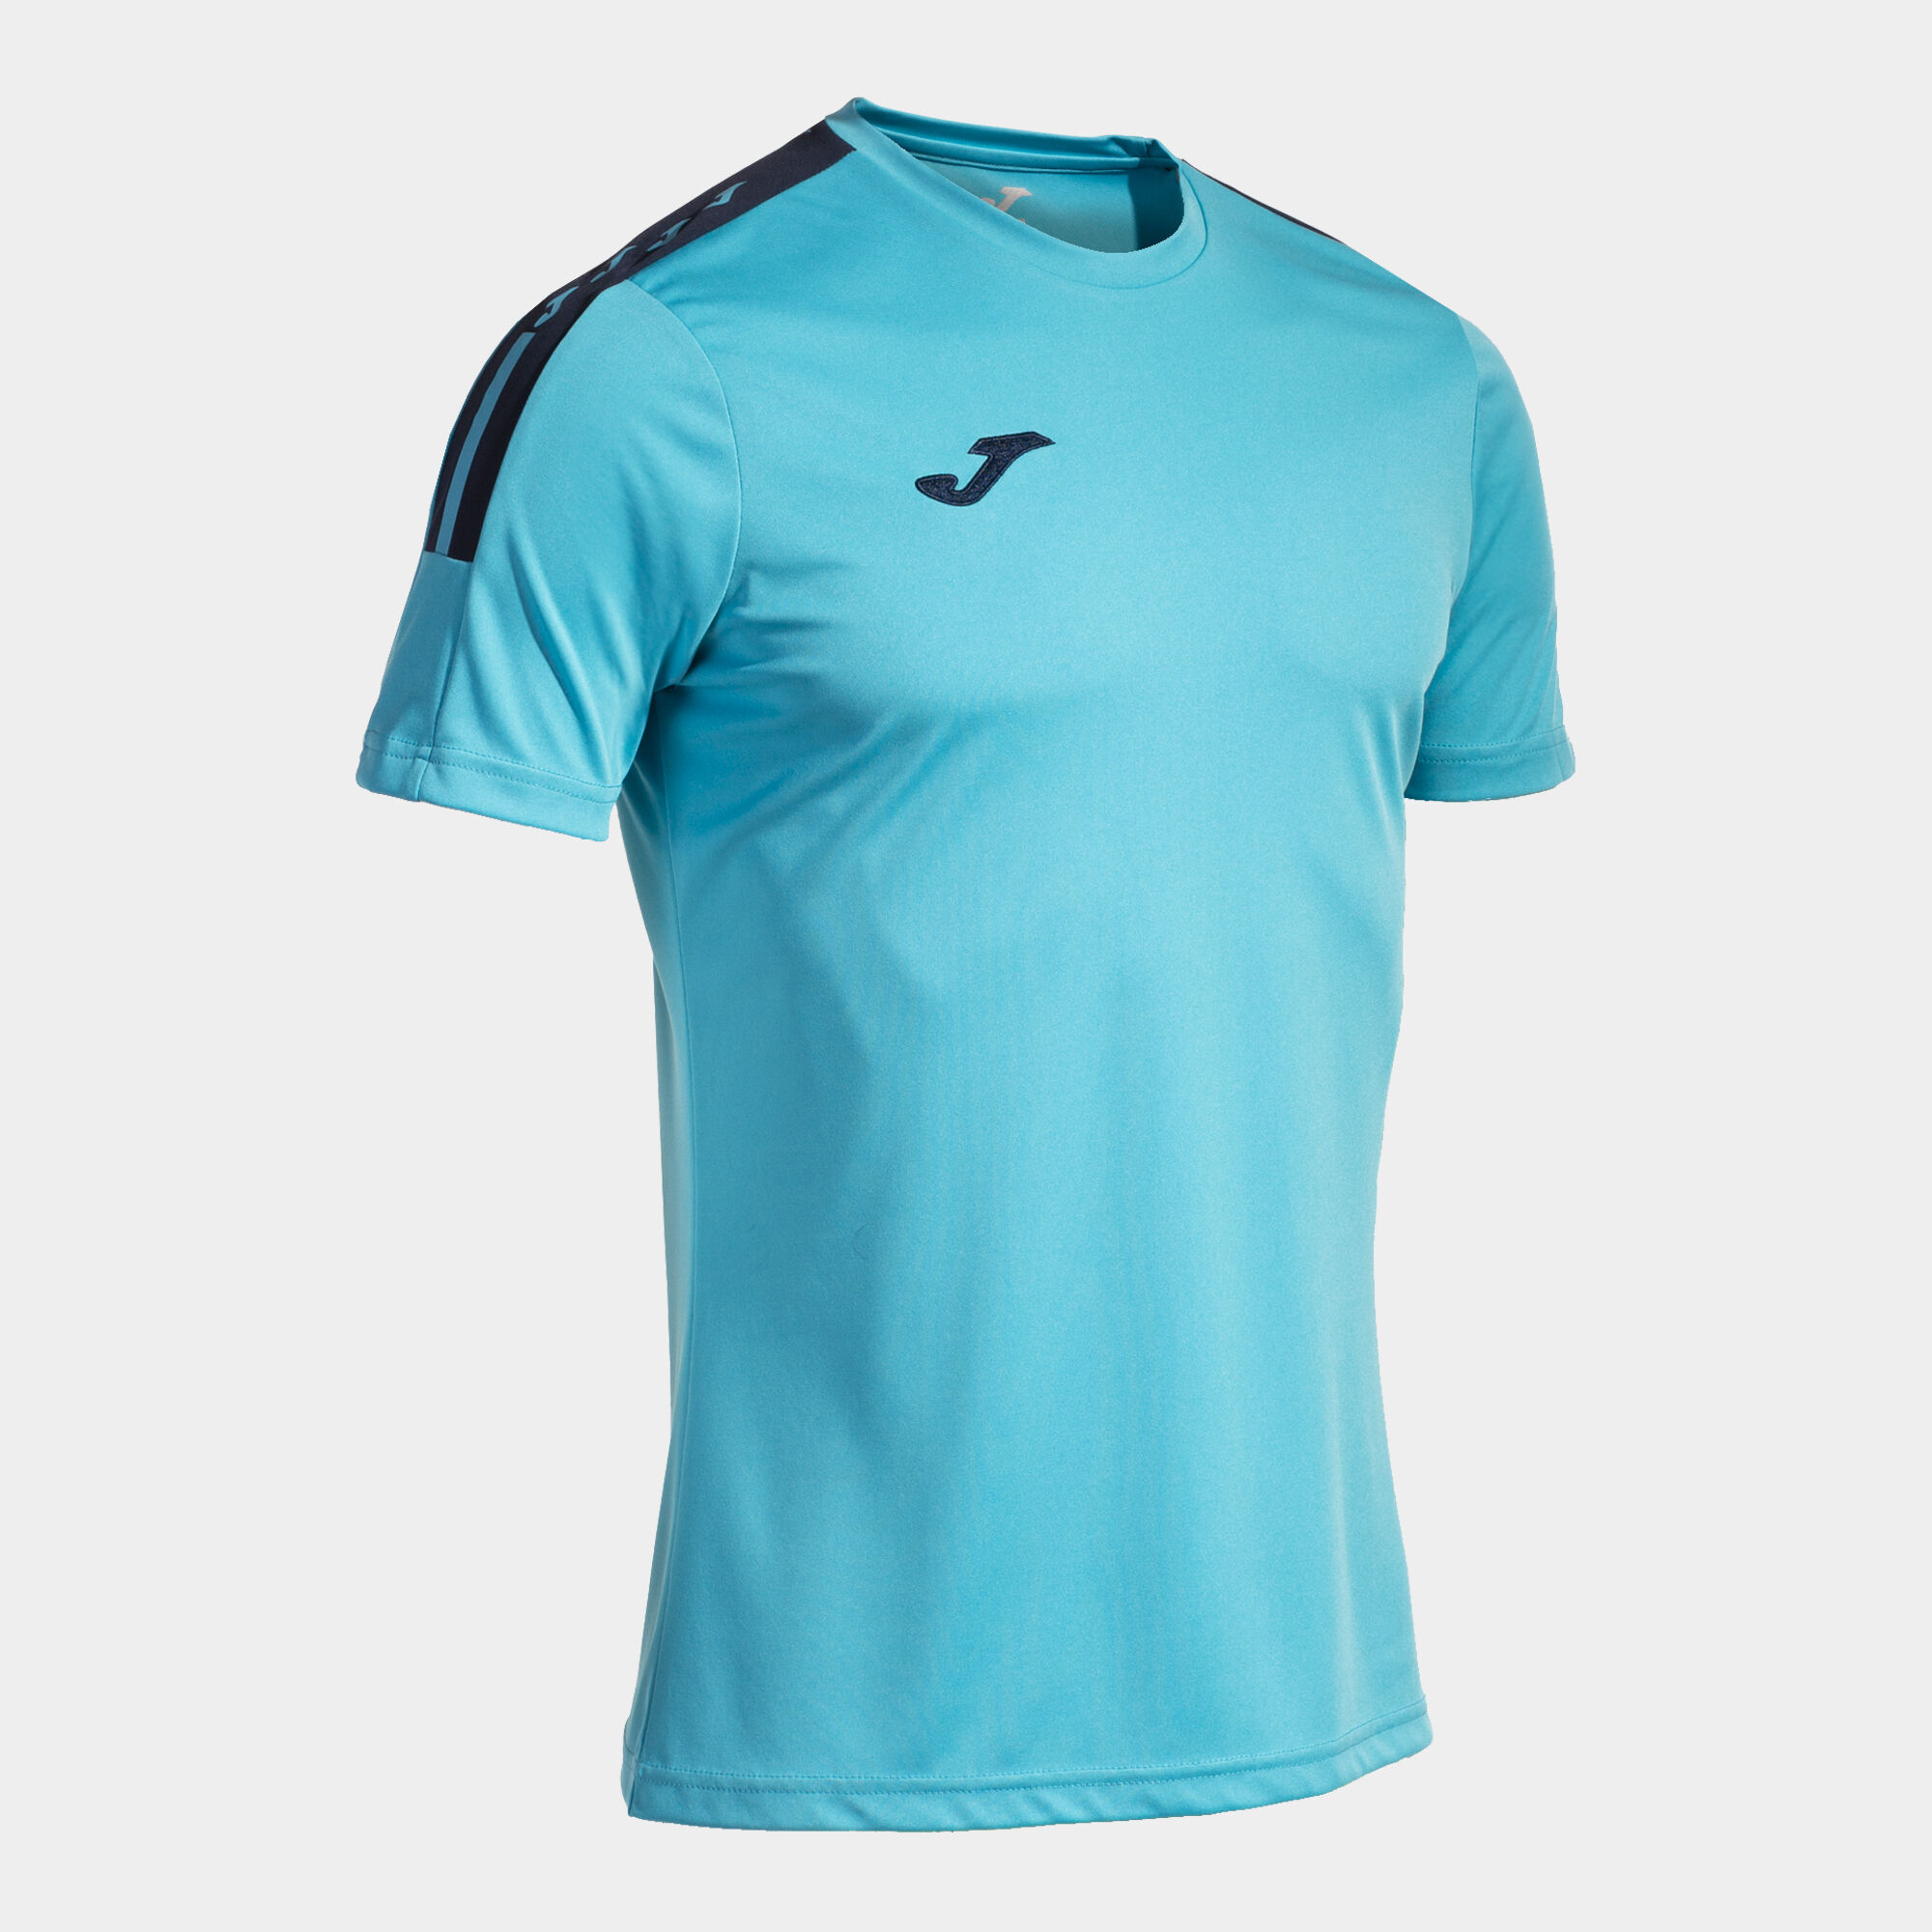 T-shirt manga curta homem Olimpiada azul-turquesa fluorescente azul marinho